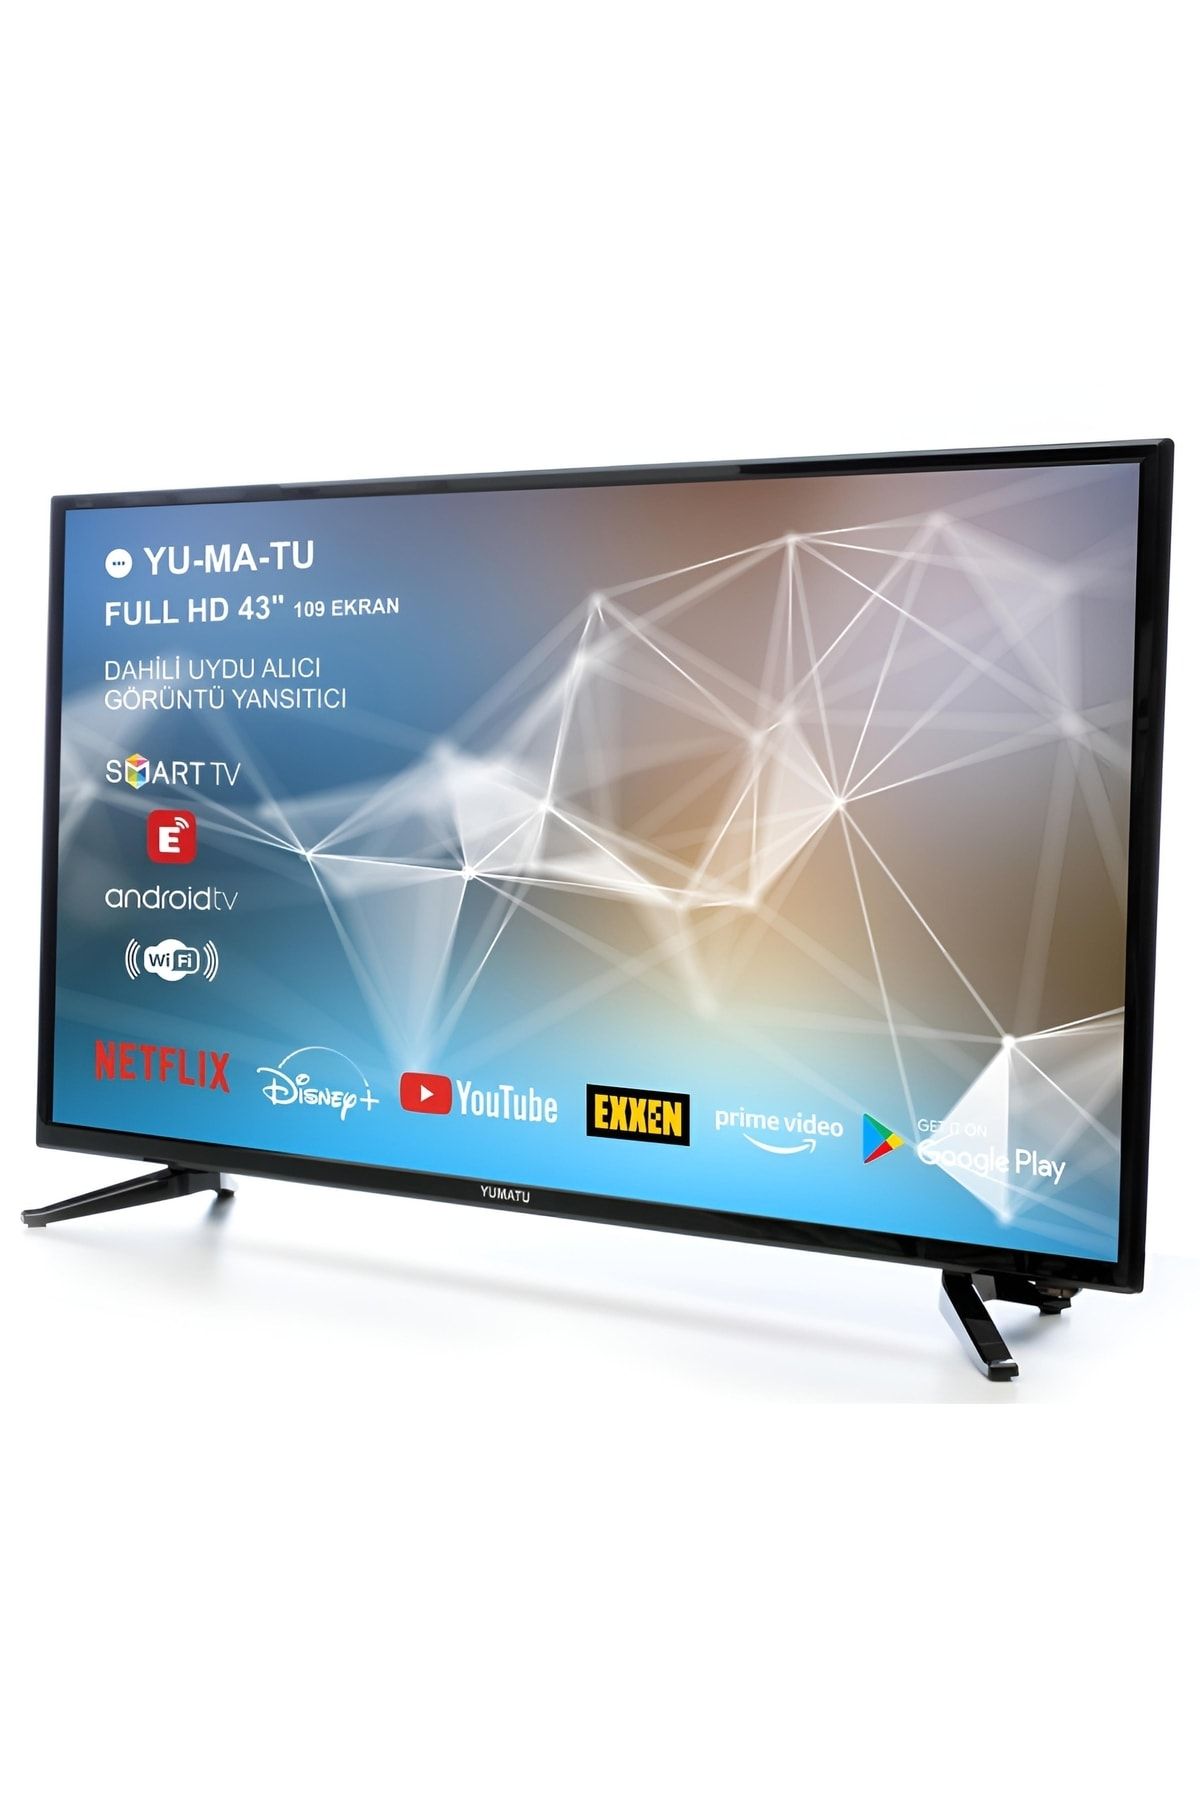 Yumatu 43" 109 Ekran Uydu Alıcılı Full Hd Android Smart Led Tv